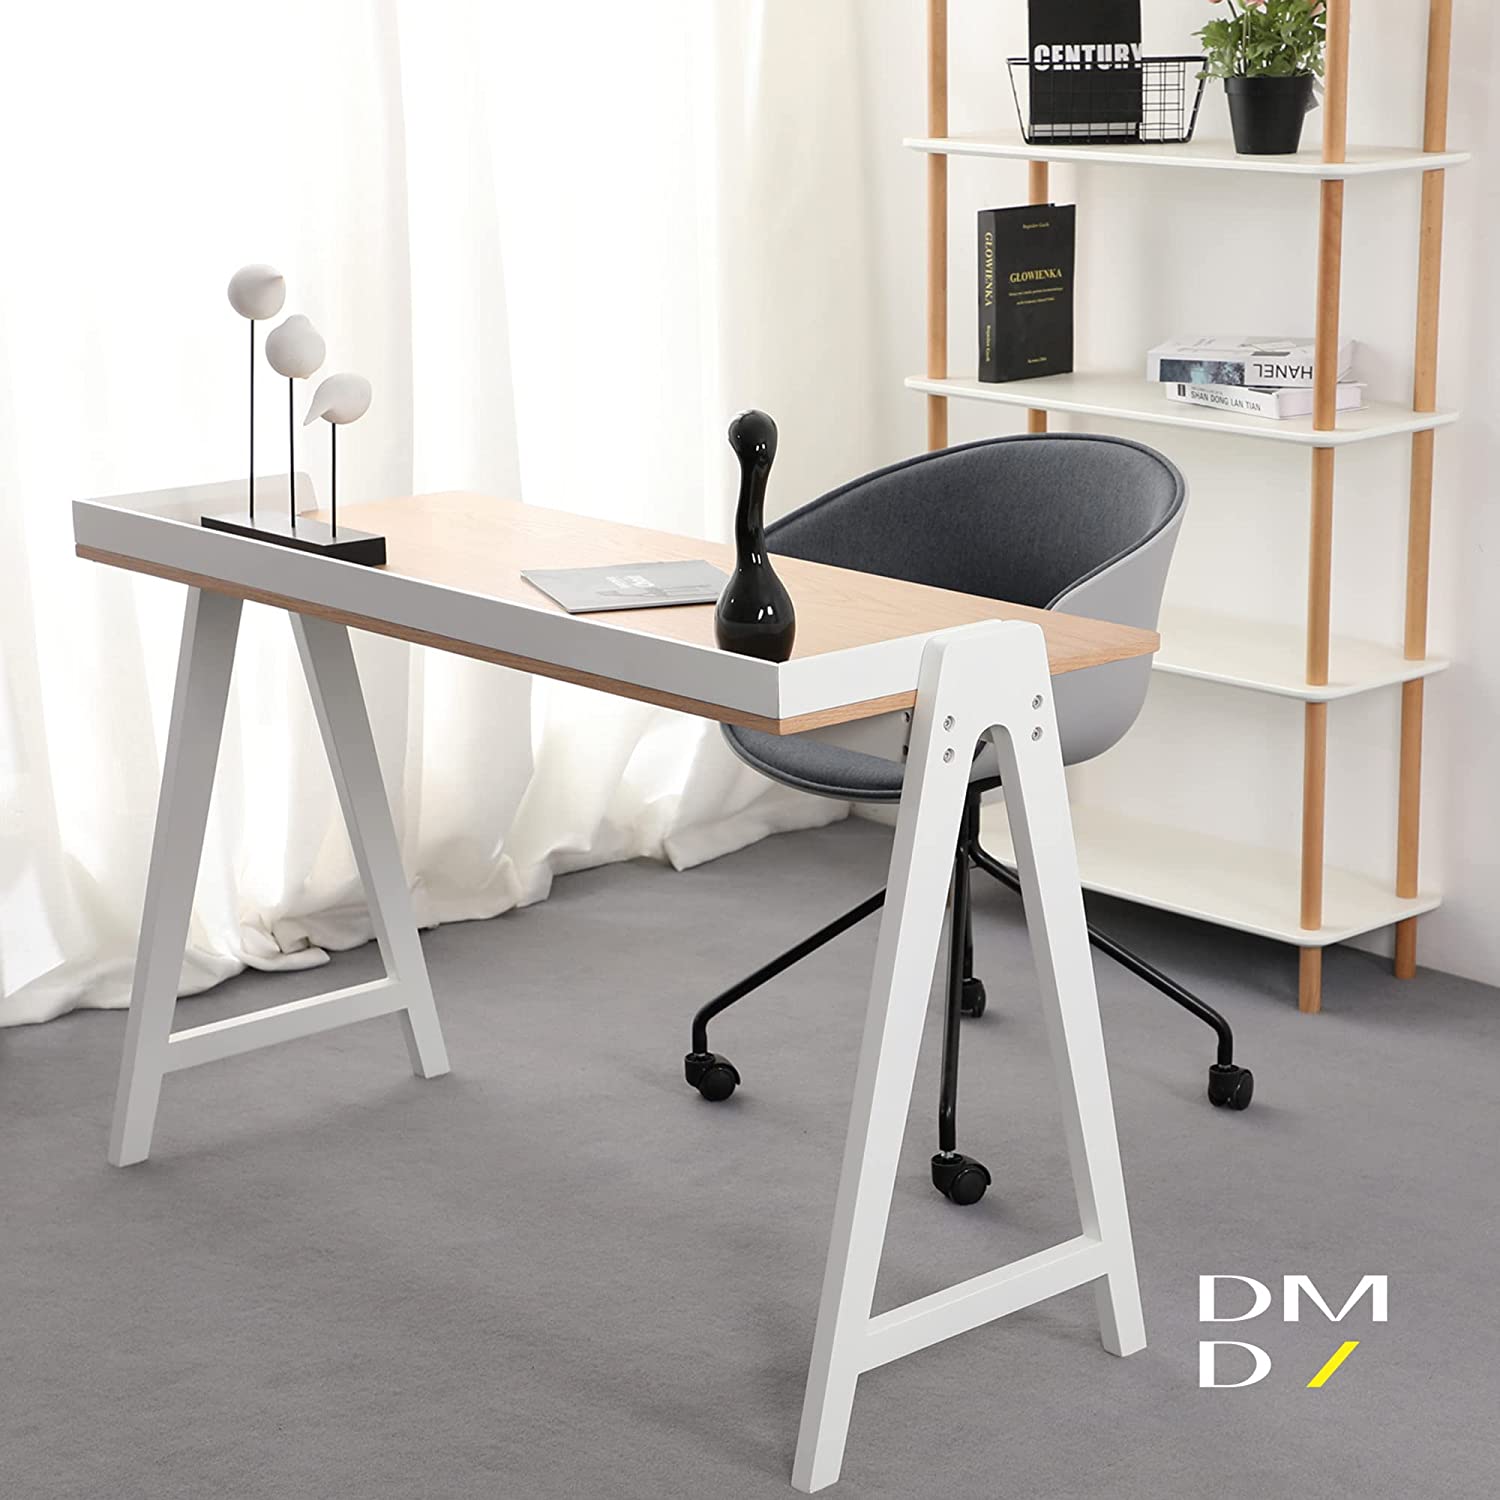 KAI Desk, Modern Nordic Desk, Study desk, Computer Desk, Study Table for home office with Solid Wood Base & Oak Top By Daamudi workspace setup